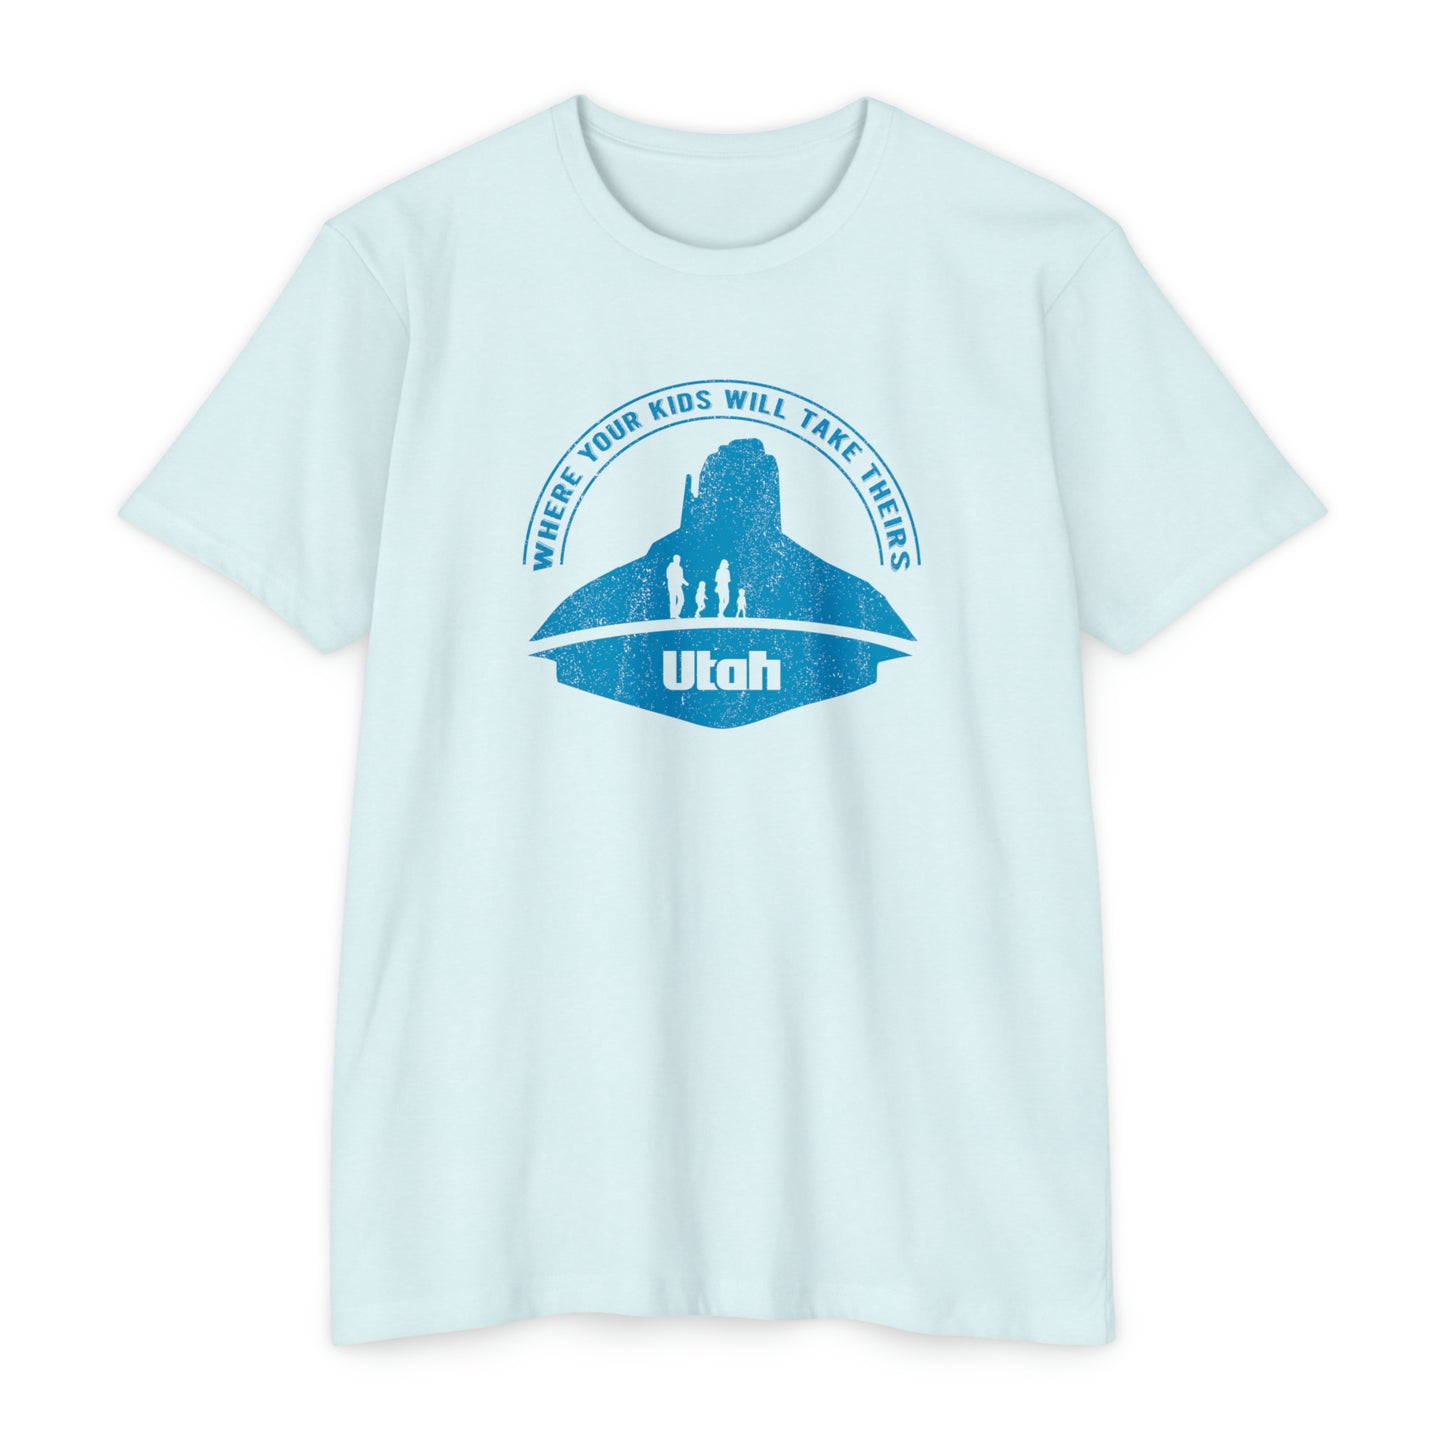 Mens" Where Your Kids Will Take Theirs" Shirt - Utah.com